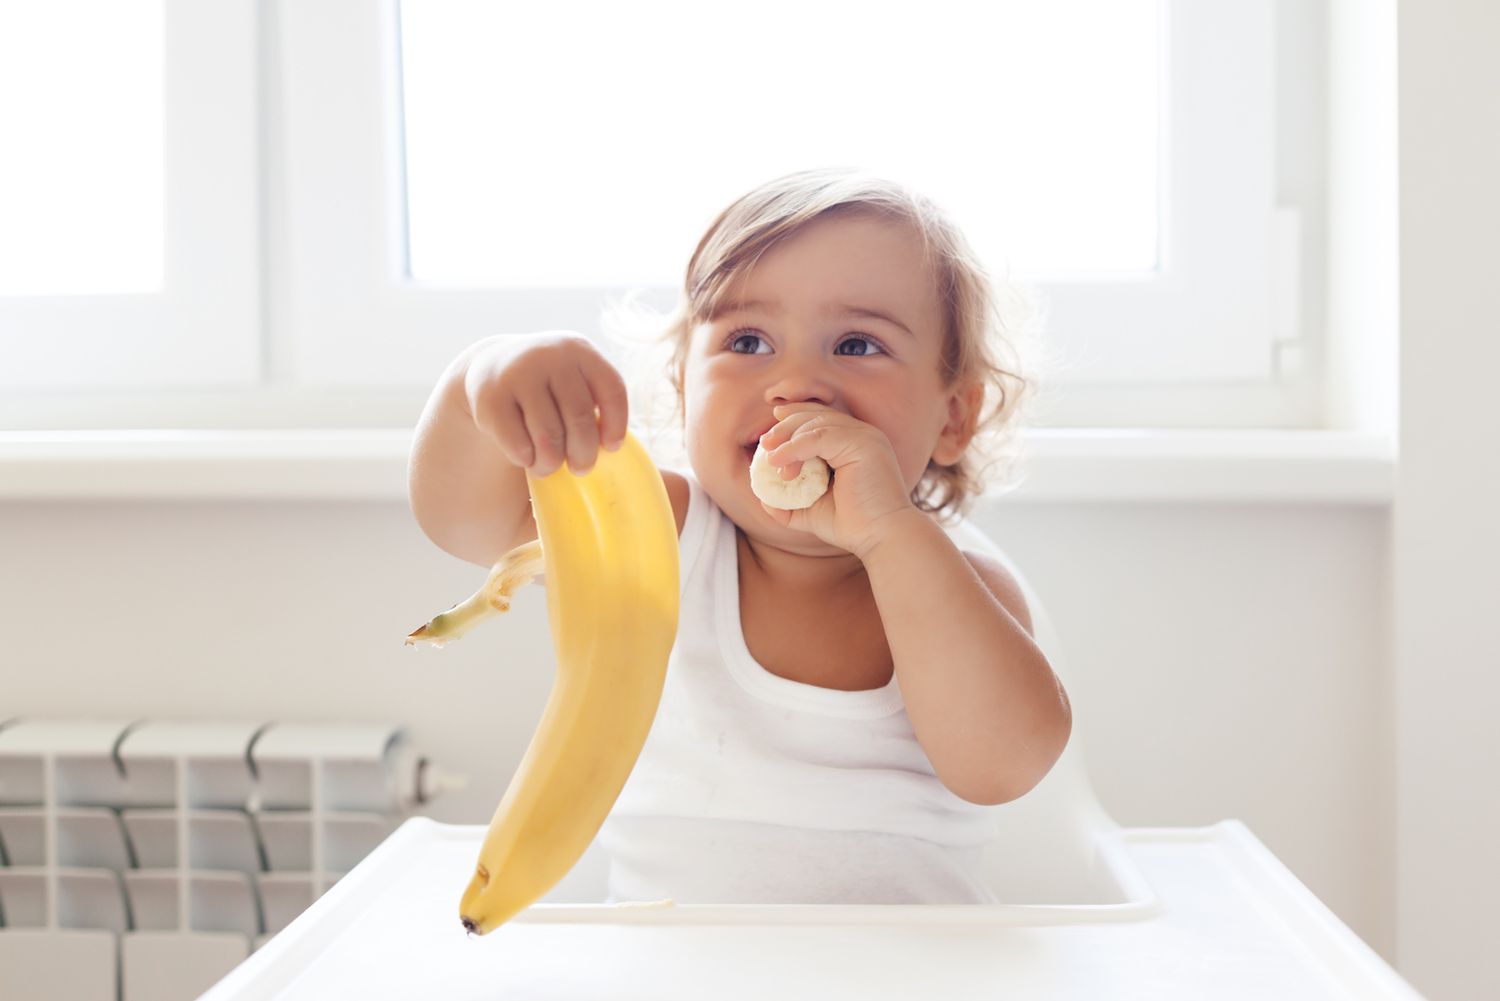 baby eating banana